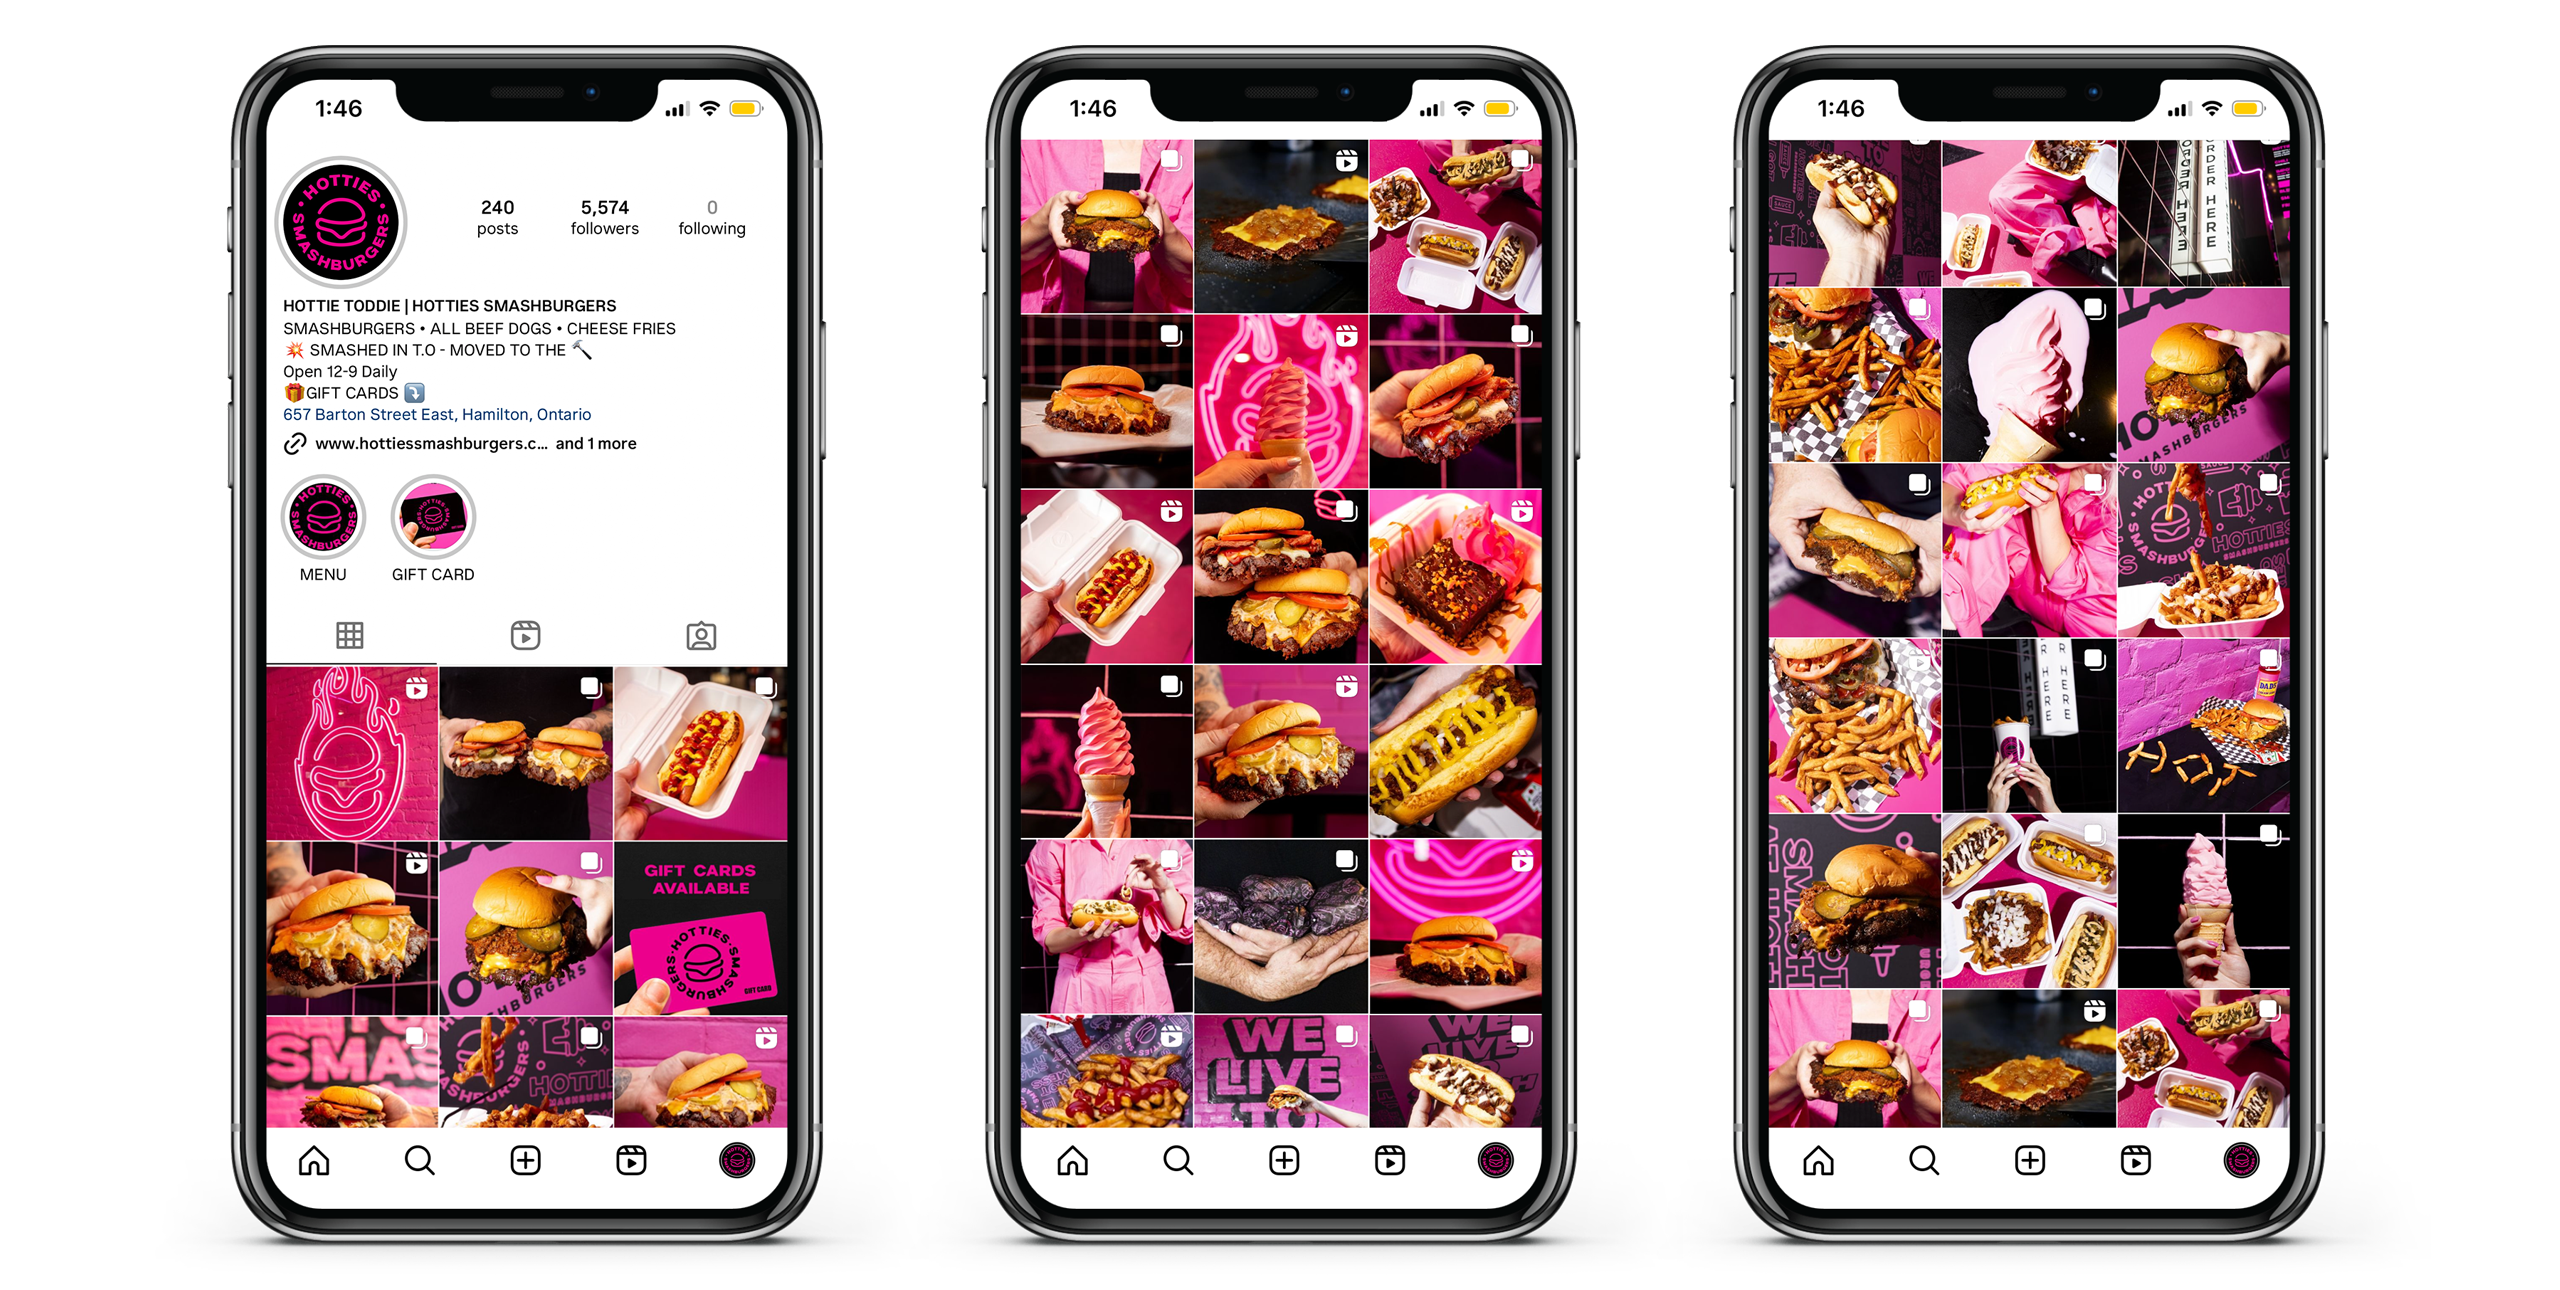 Hotties Smash Burgers social media content creation management Instagram feed